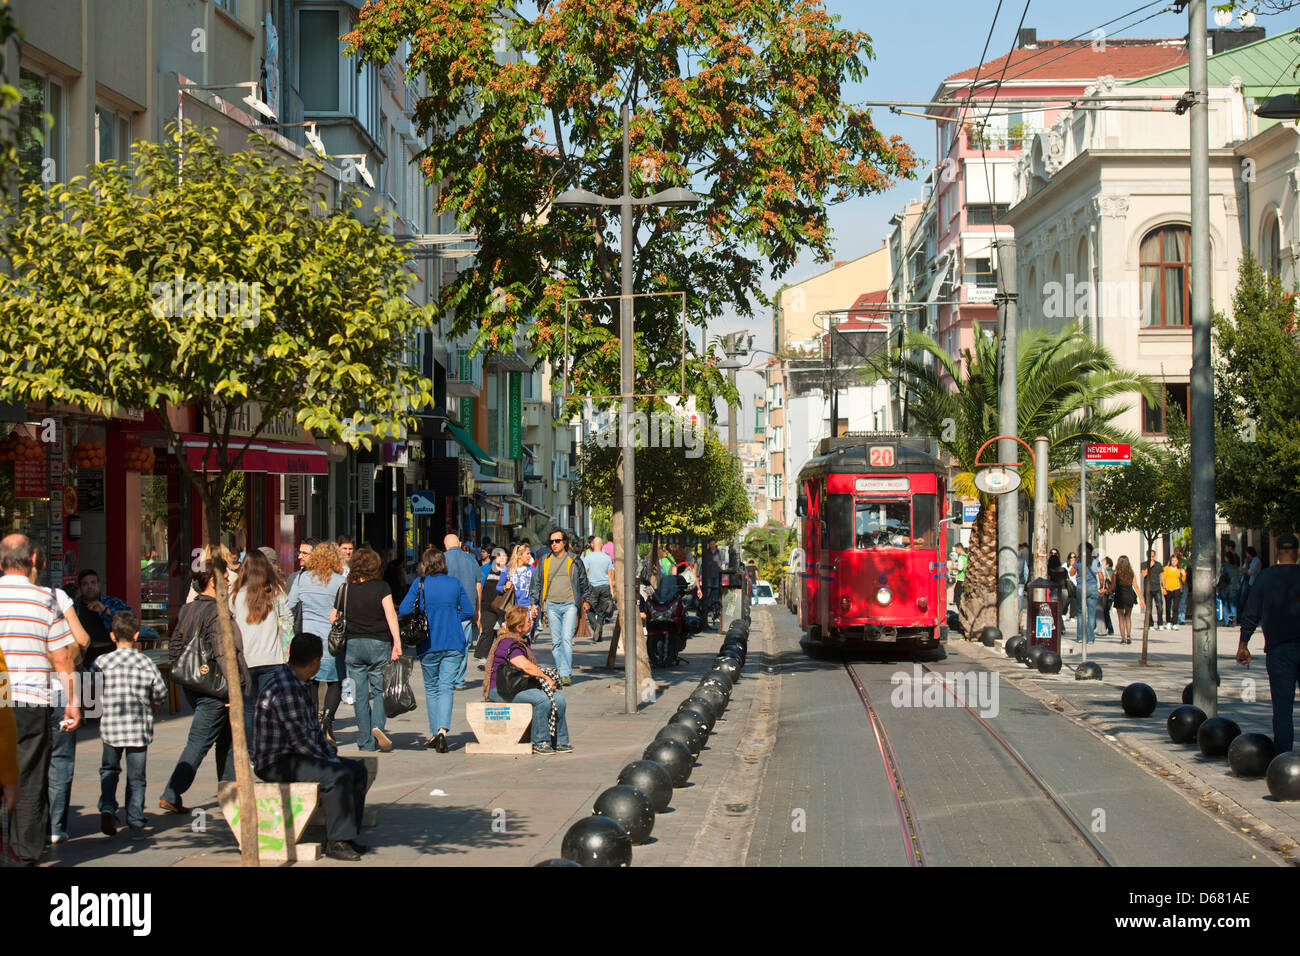 Türkei, Istanbul, Kadiköy, historische Straßenbahn Kadiköy-Moda in der Haupteinkaufsstrasse Bahariye Caddesi Stock Photo